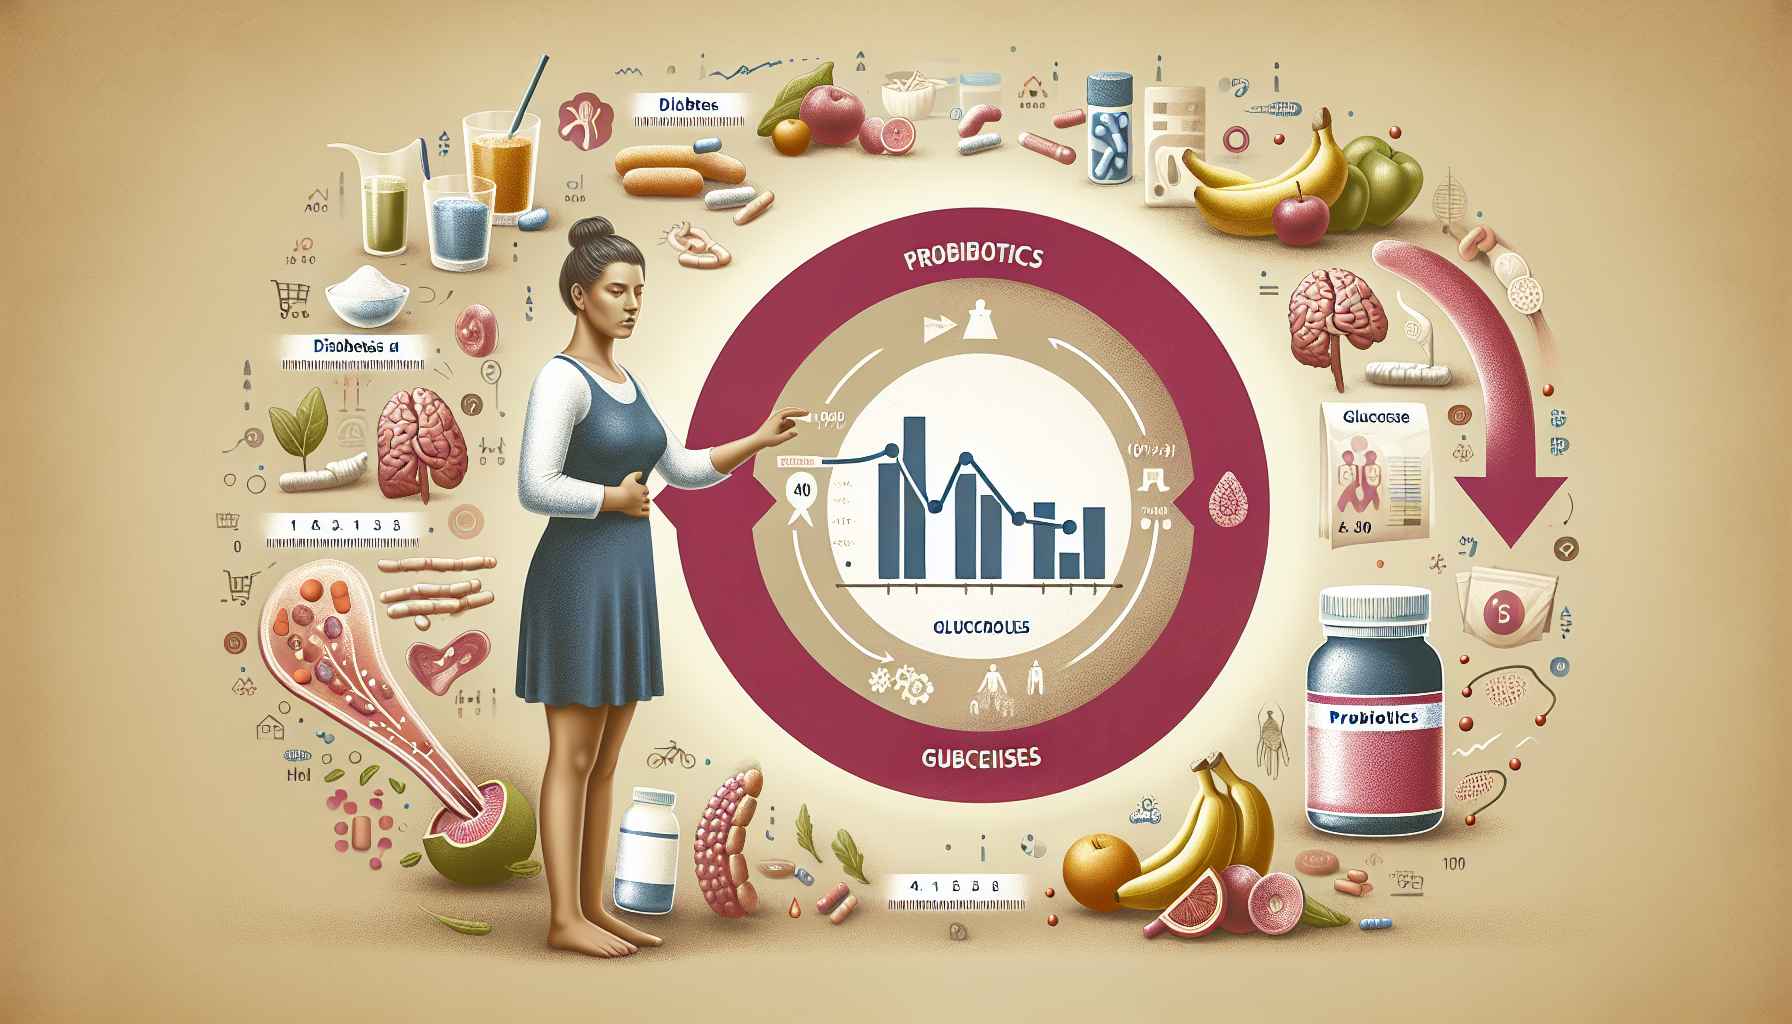 Os Benefícios dos Probióticos no Controle do Diabetes e da Saúde Geral